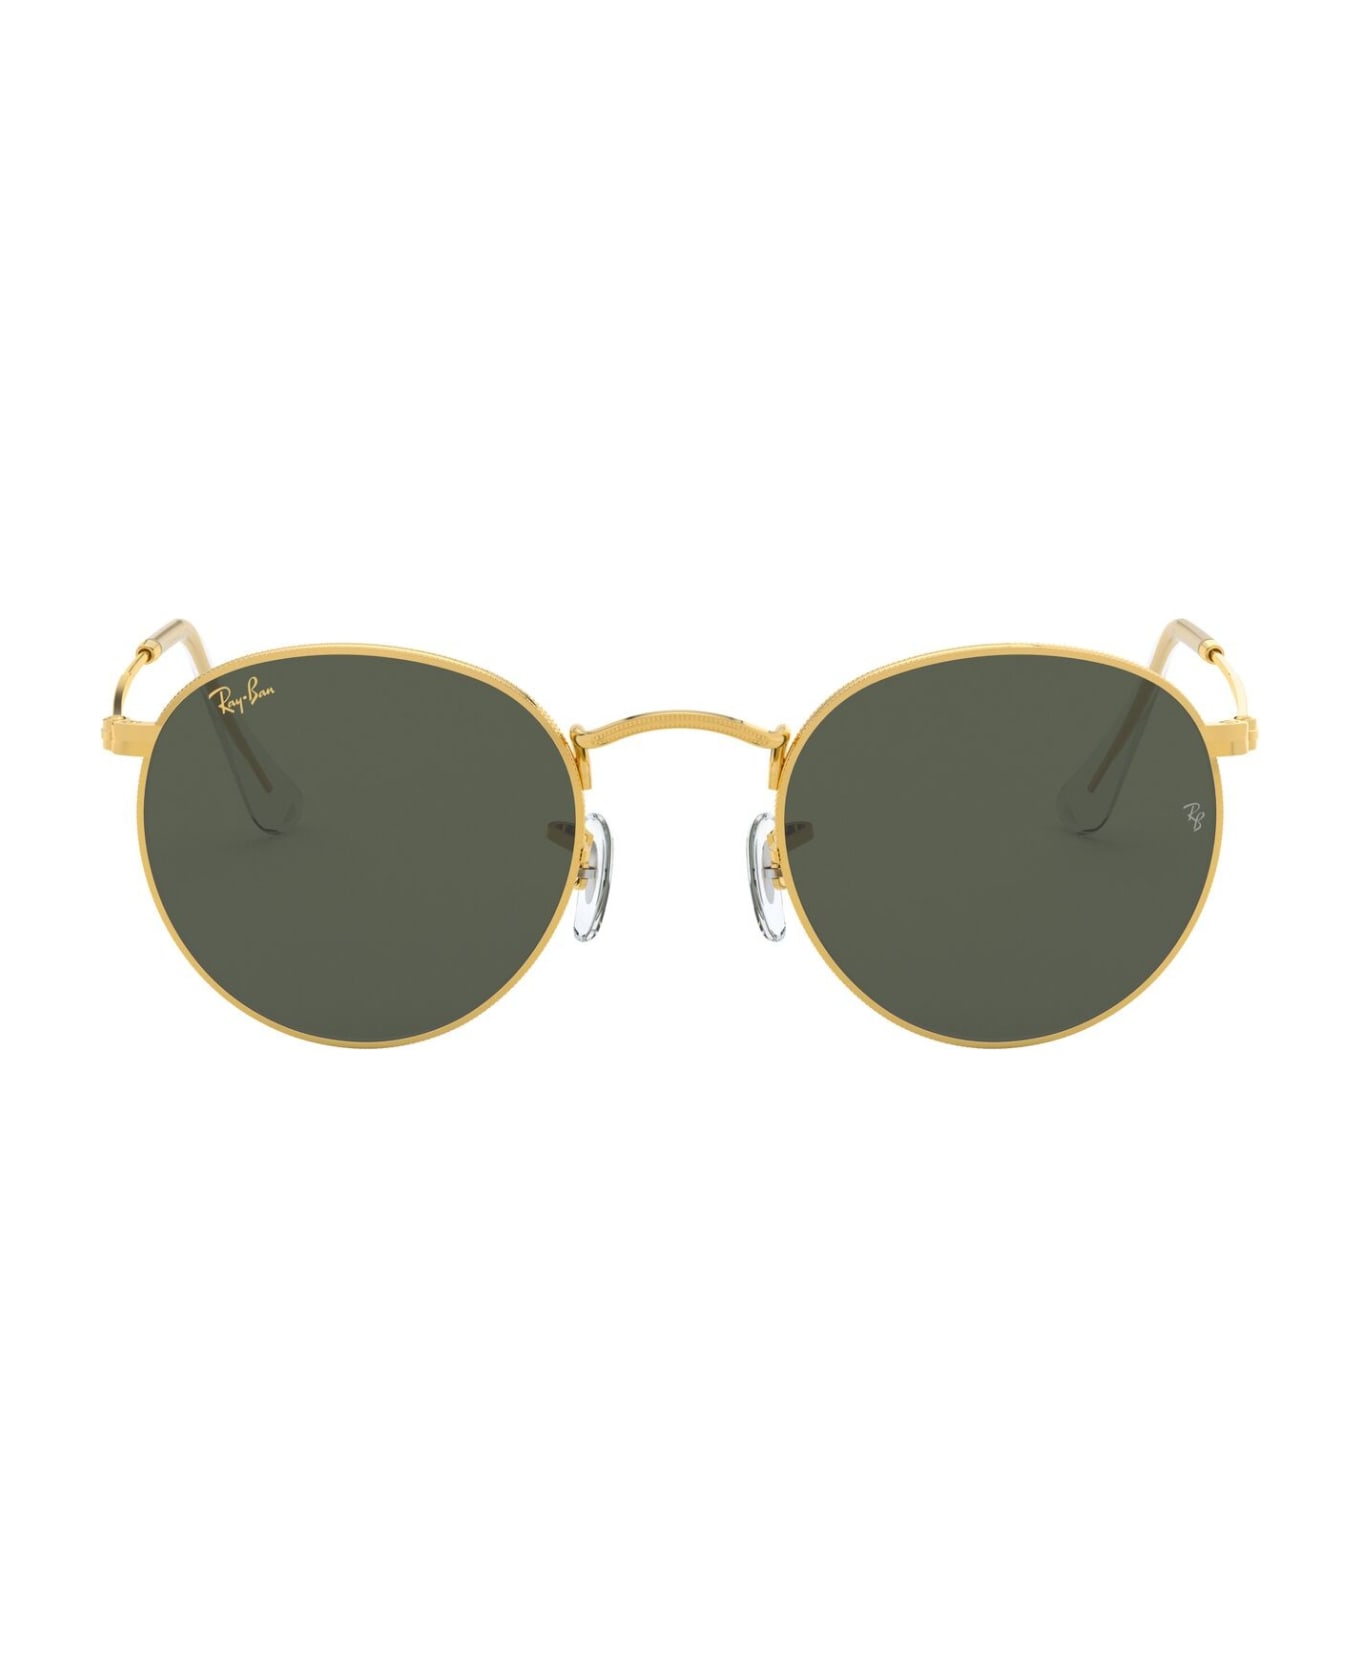 Ray-Ban Sunglasses - Oro/Verde サングラス